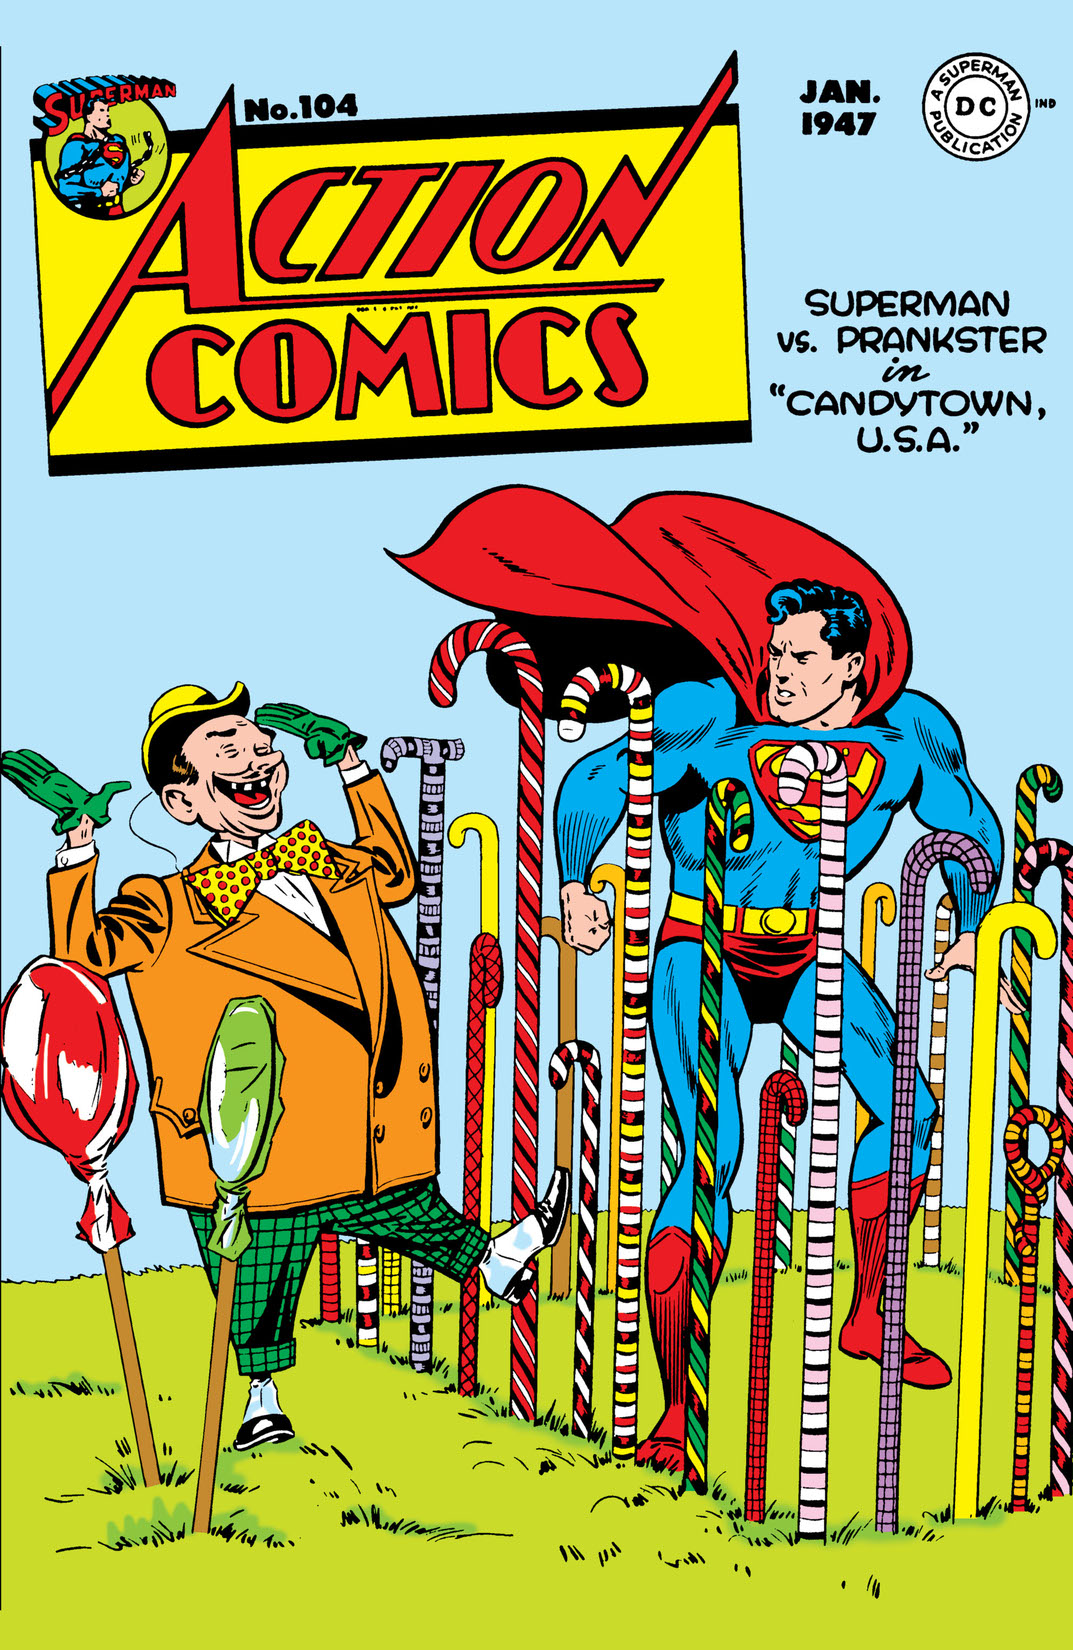 Action Comics (1938-) #104 preview images